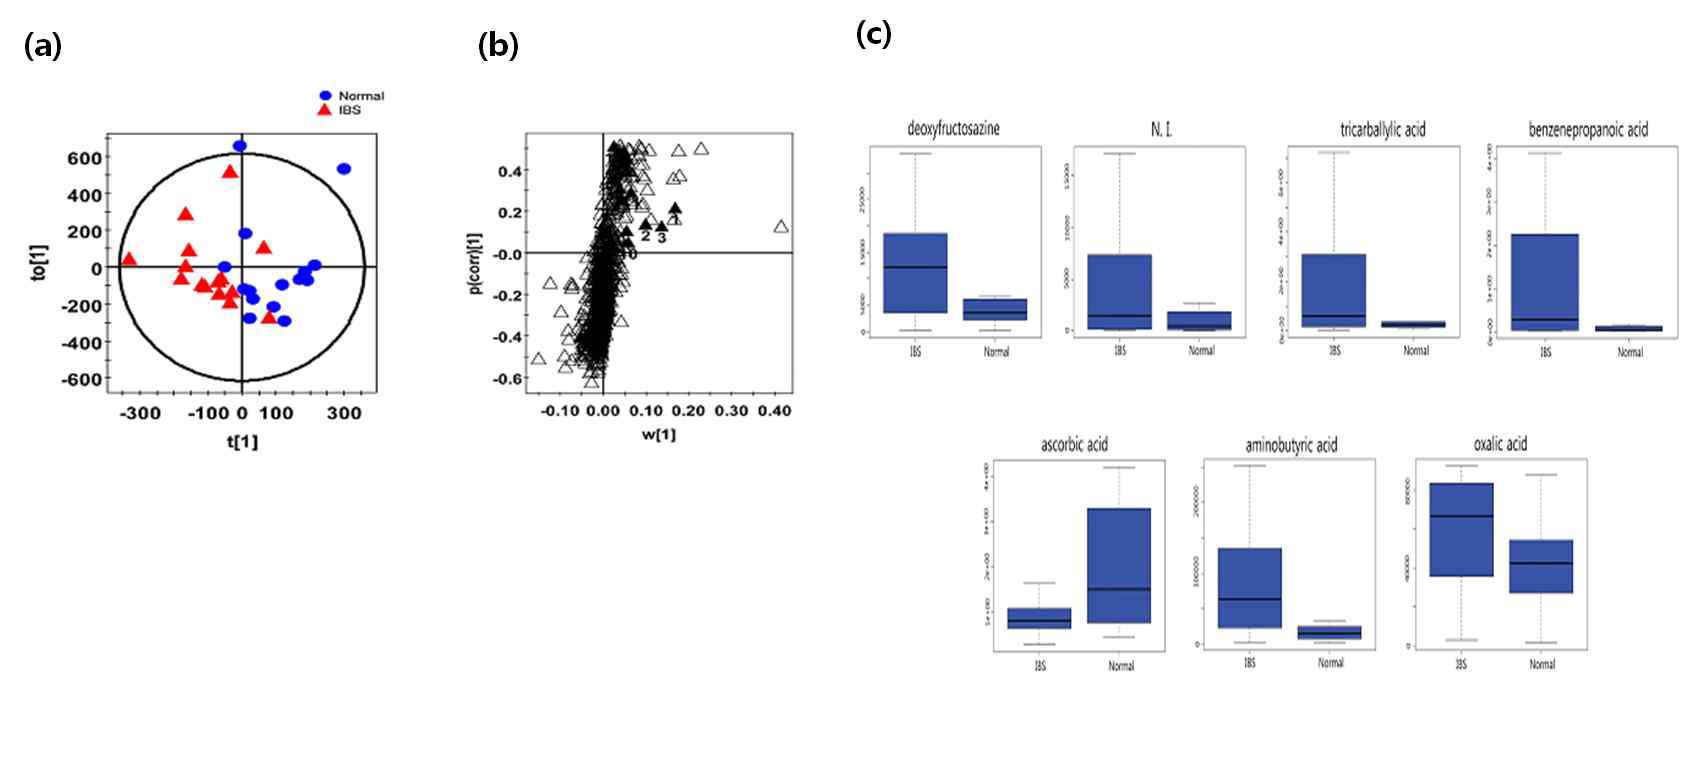 IBS 환자와 Normal 그룹간의 일차 대사산물에 대한 (a) OPLS-DA score plot,(b) S-plot (c) 주요 바이오마커의 함유량 비교분석